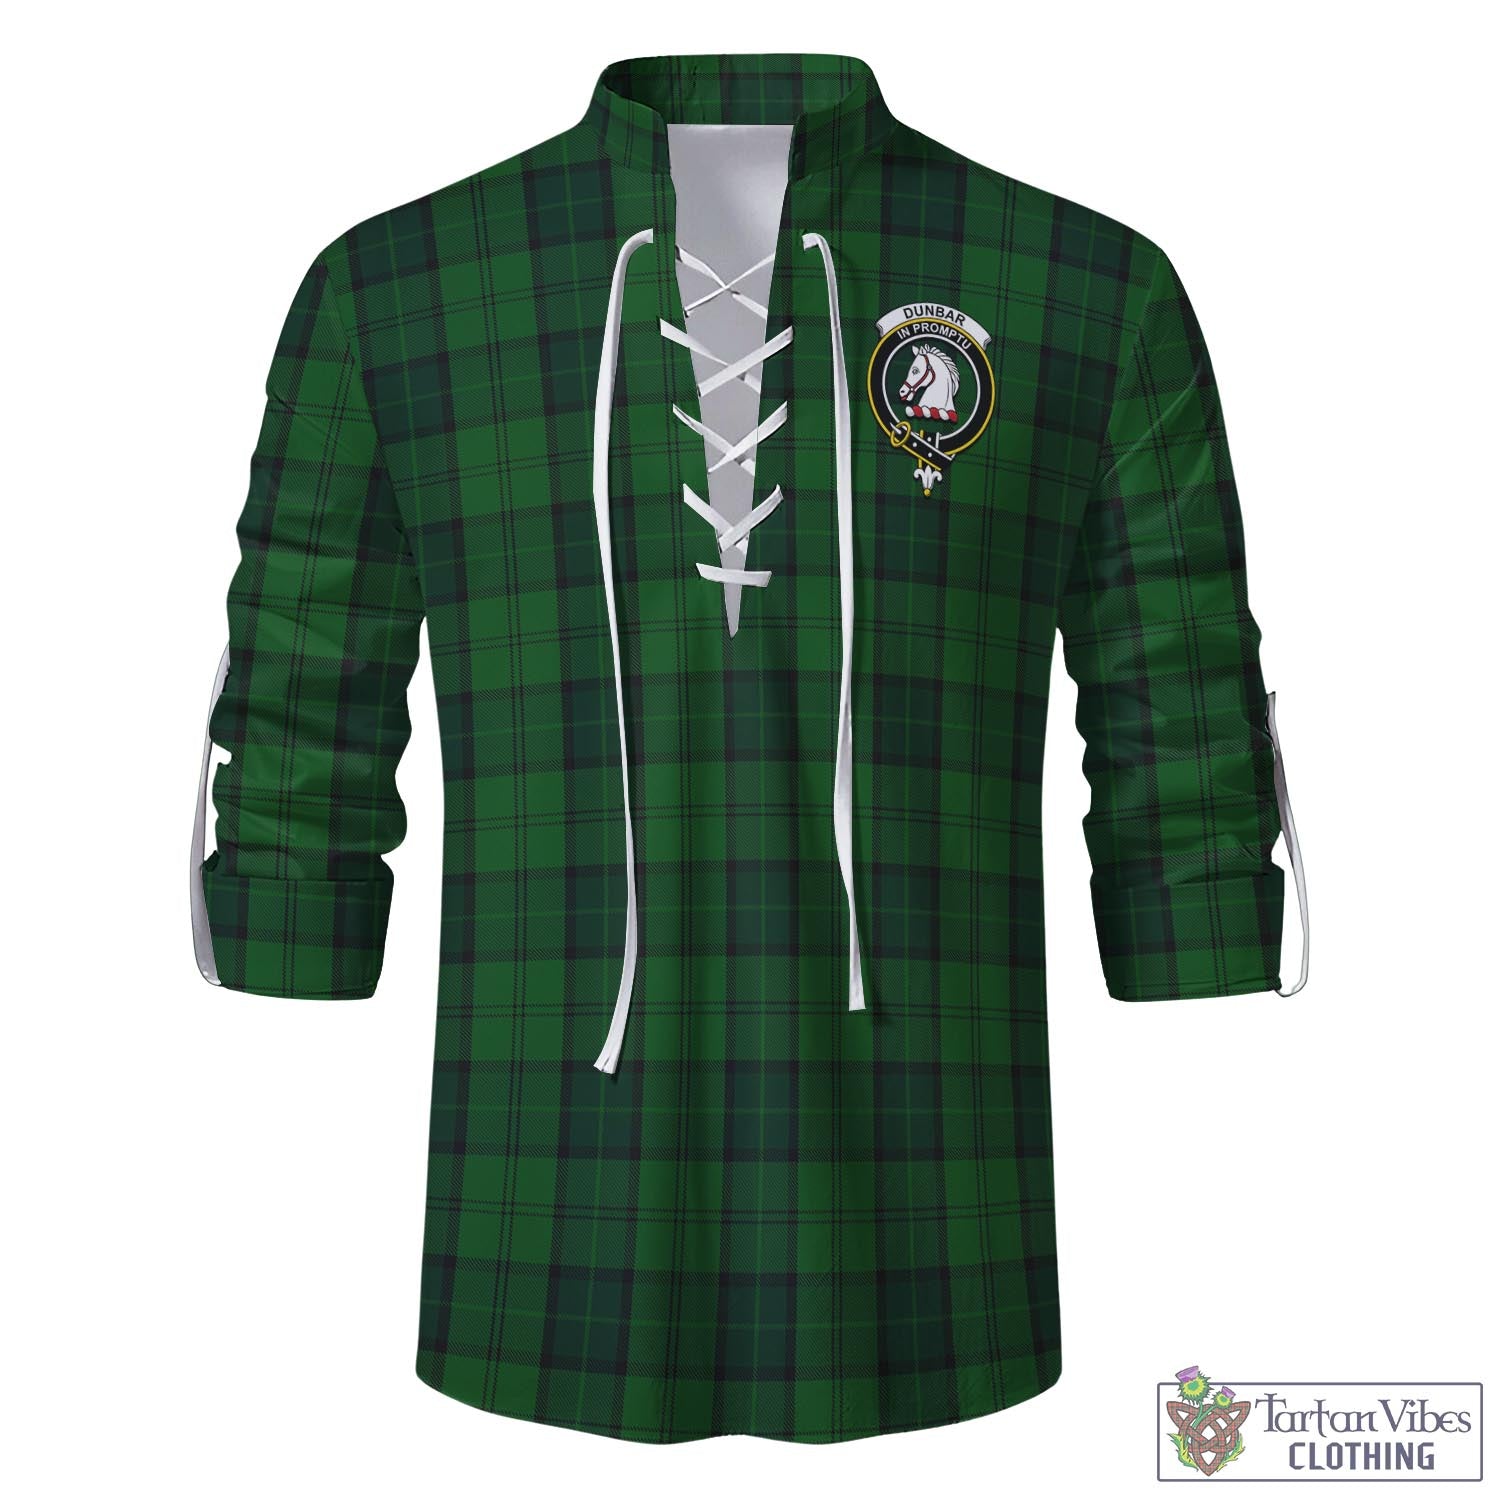 Tartan Vibes Clothing Dunbar Hunting Tartan Men's Scottish Traditional Jacobite Ghillie Kilt Shirt with Family Crest